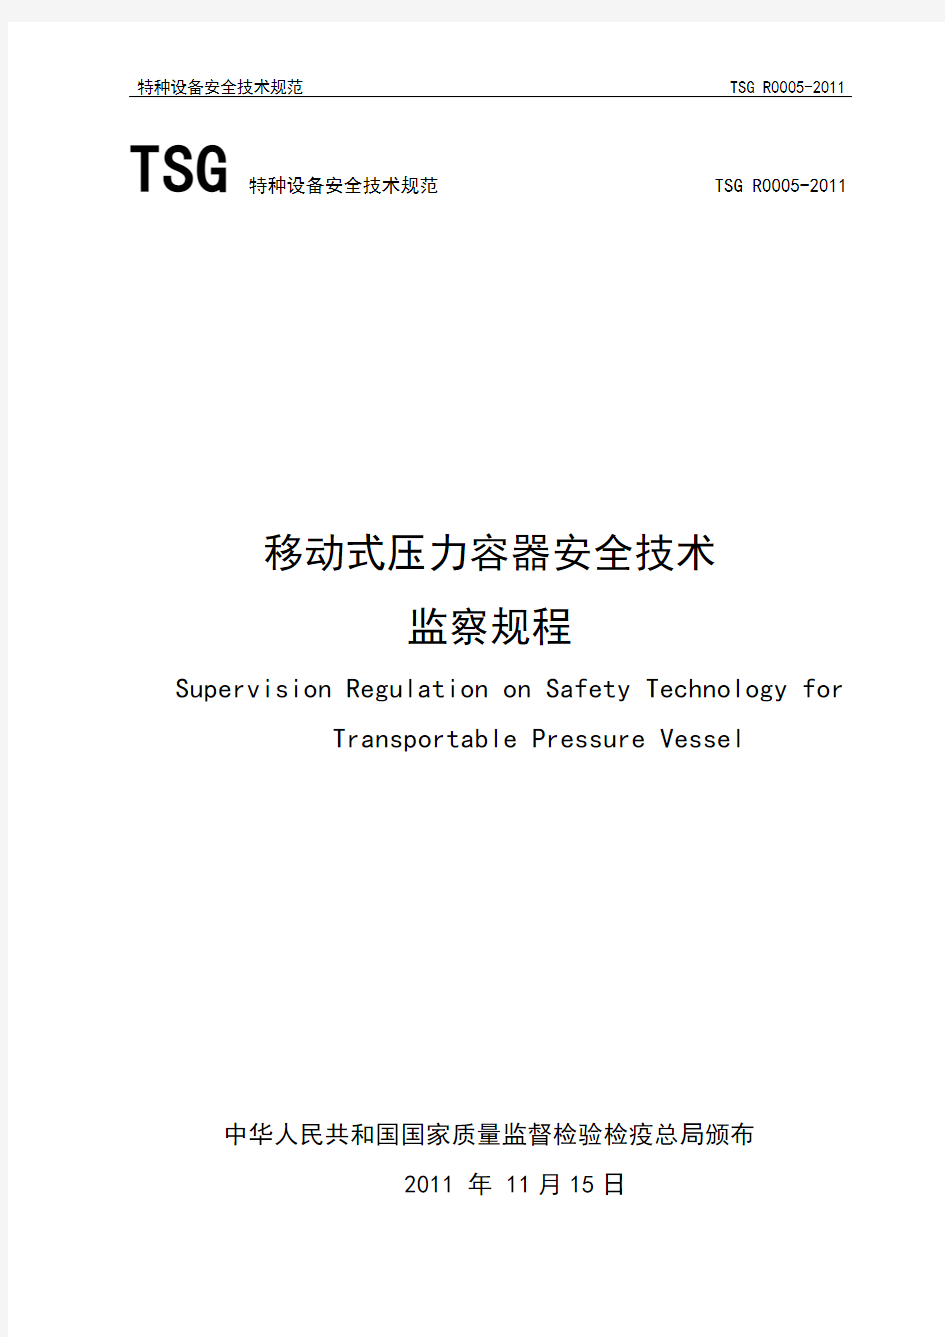 TSG-R0005-2011-移动式压力容器安全技术监察规程